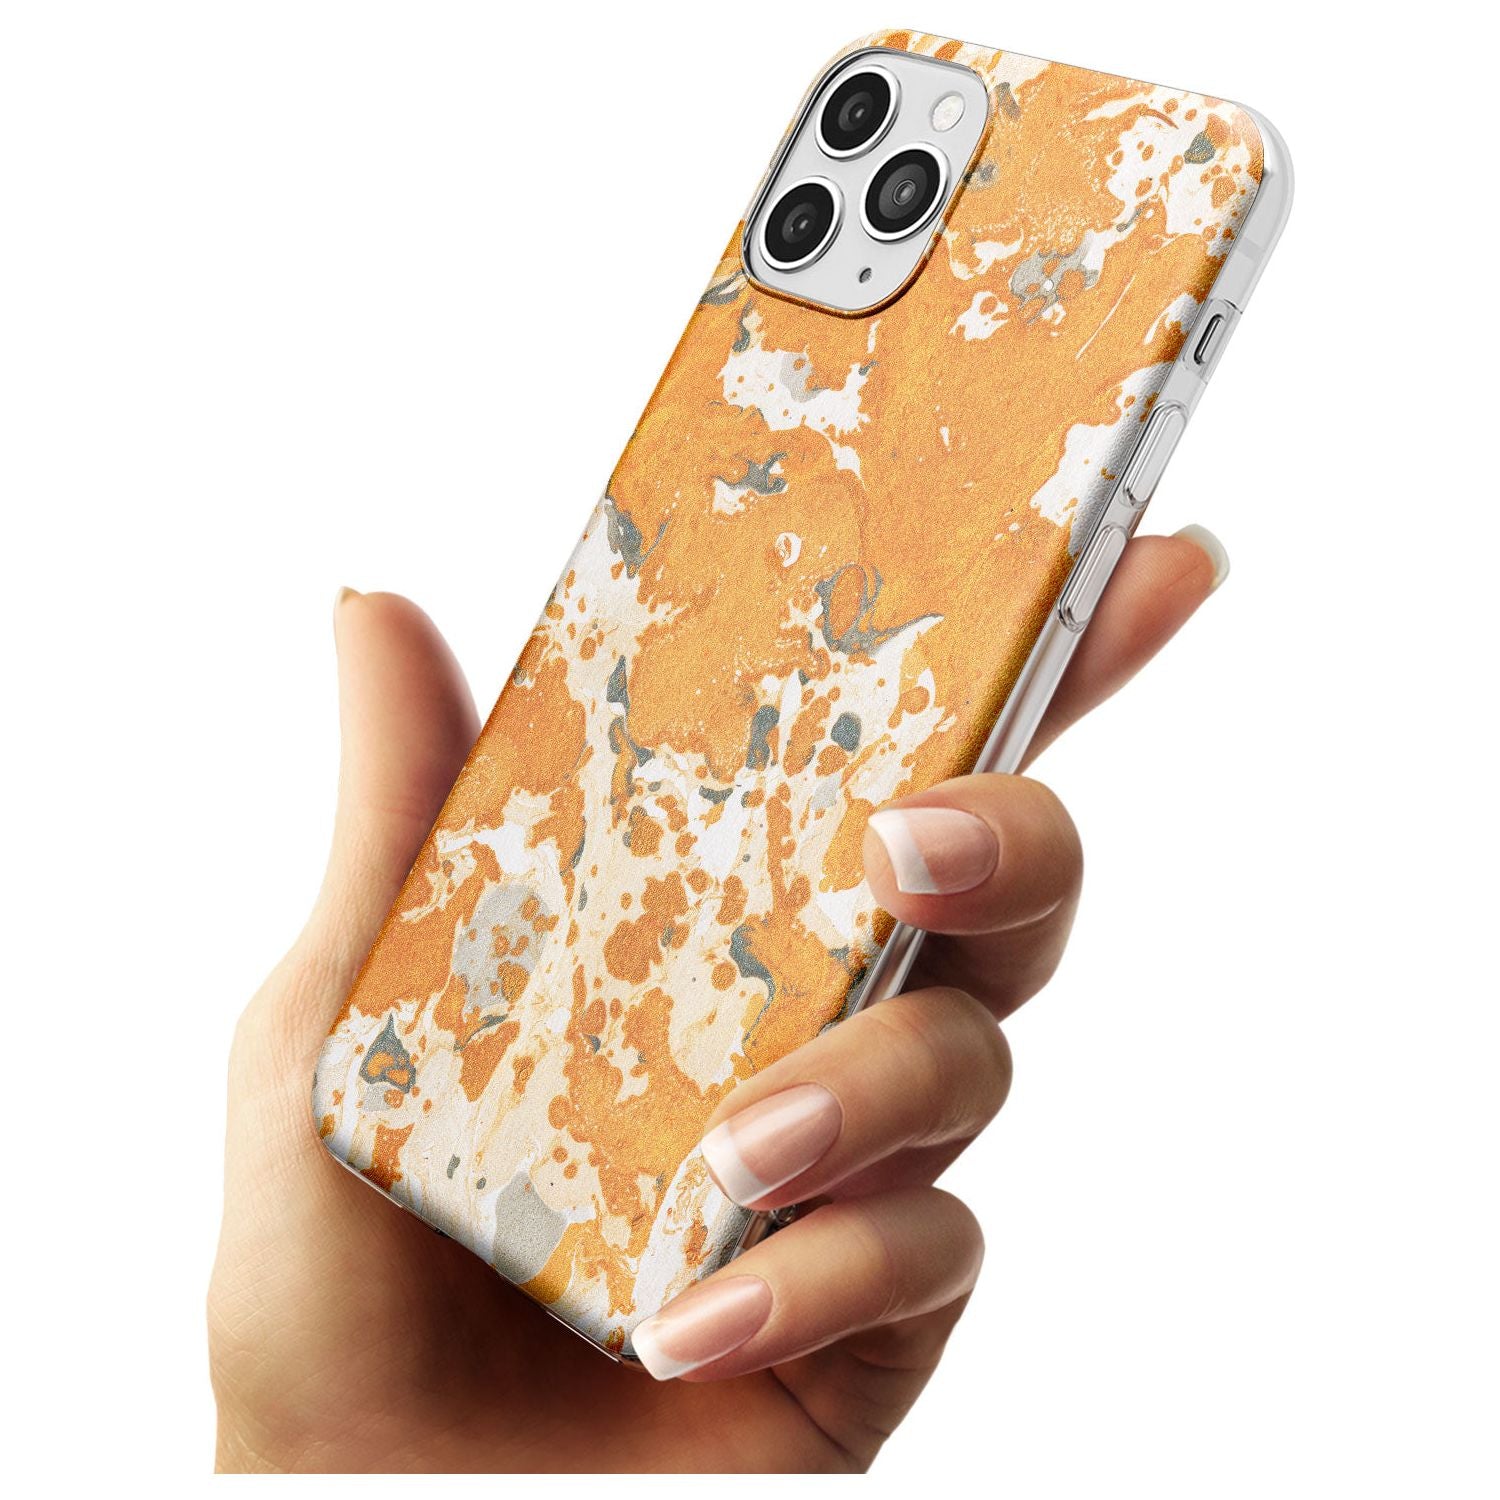 Orange Marbled Paper Pattern Slim TPU Phone Case for iPhone 11 Pro Max